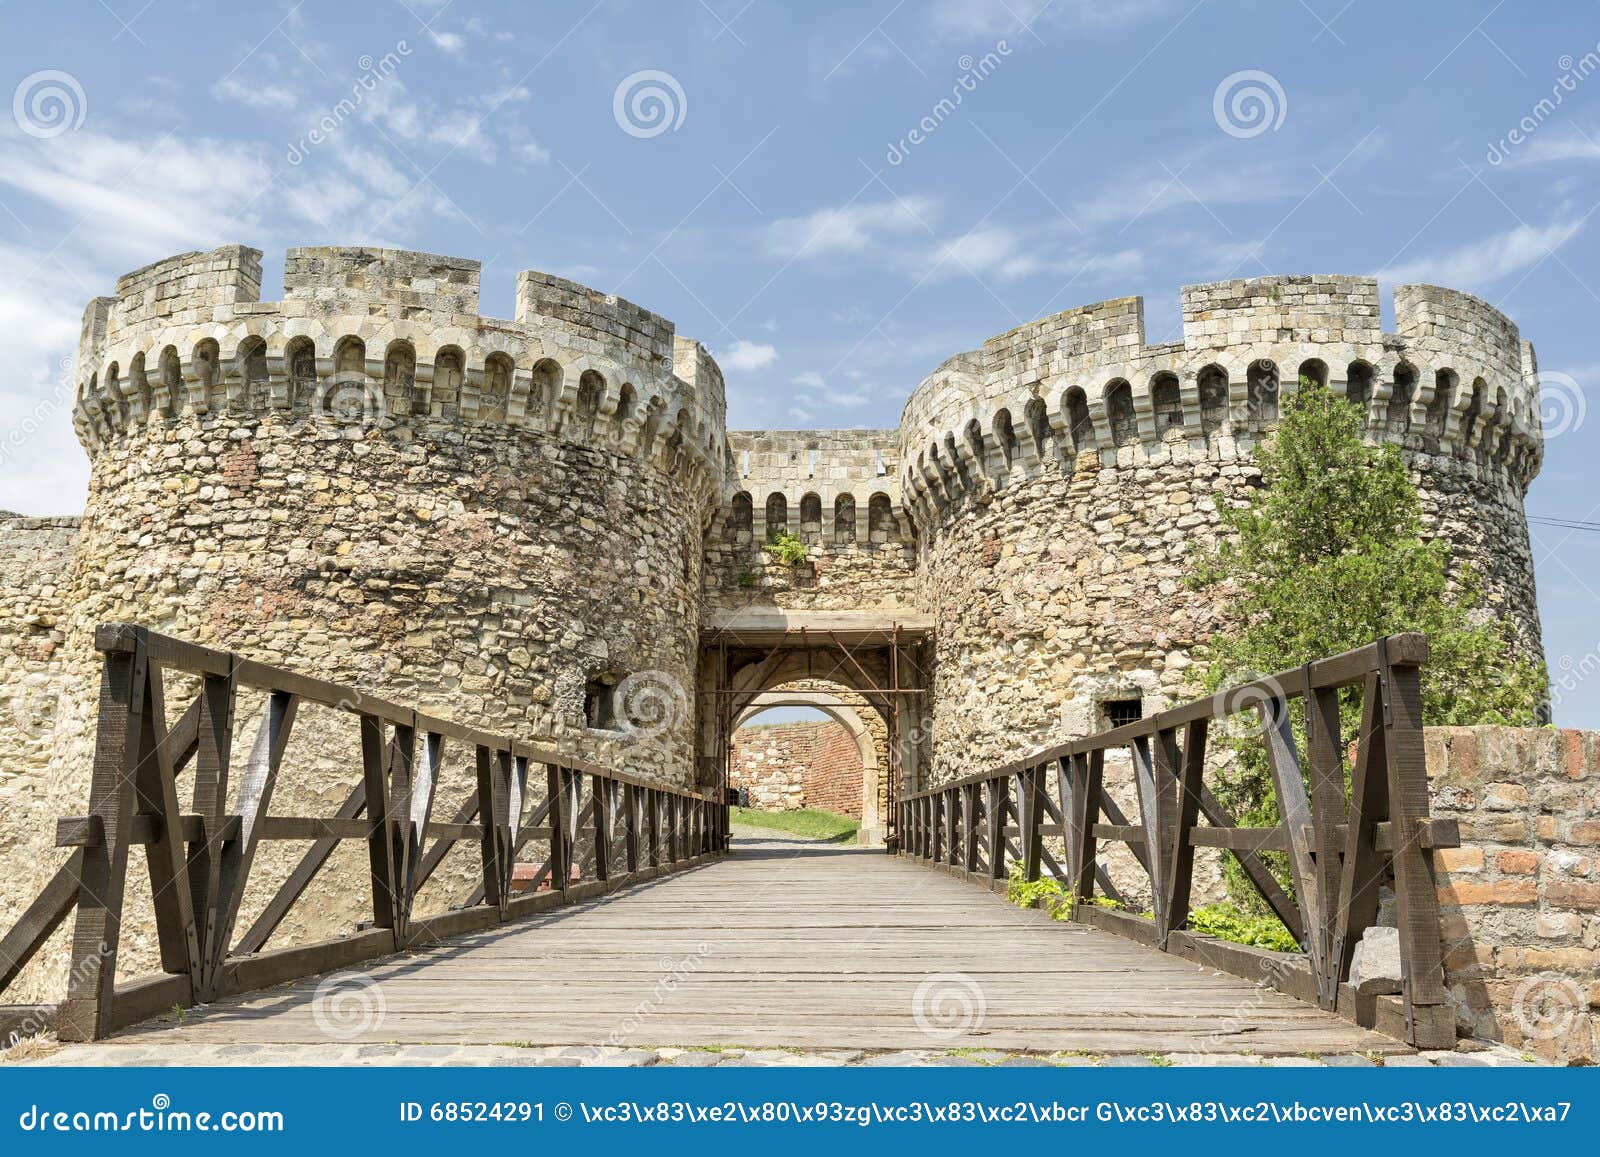 zindan gate inside belgrade fortress, belgrade, serbia